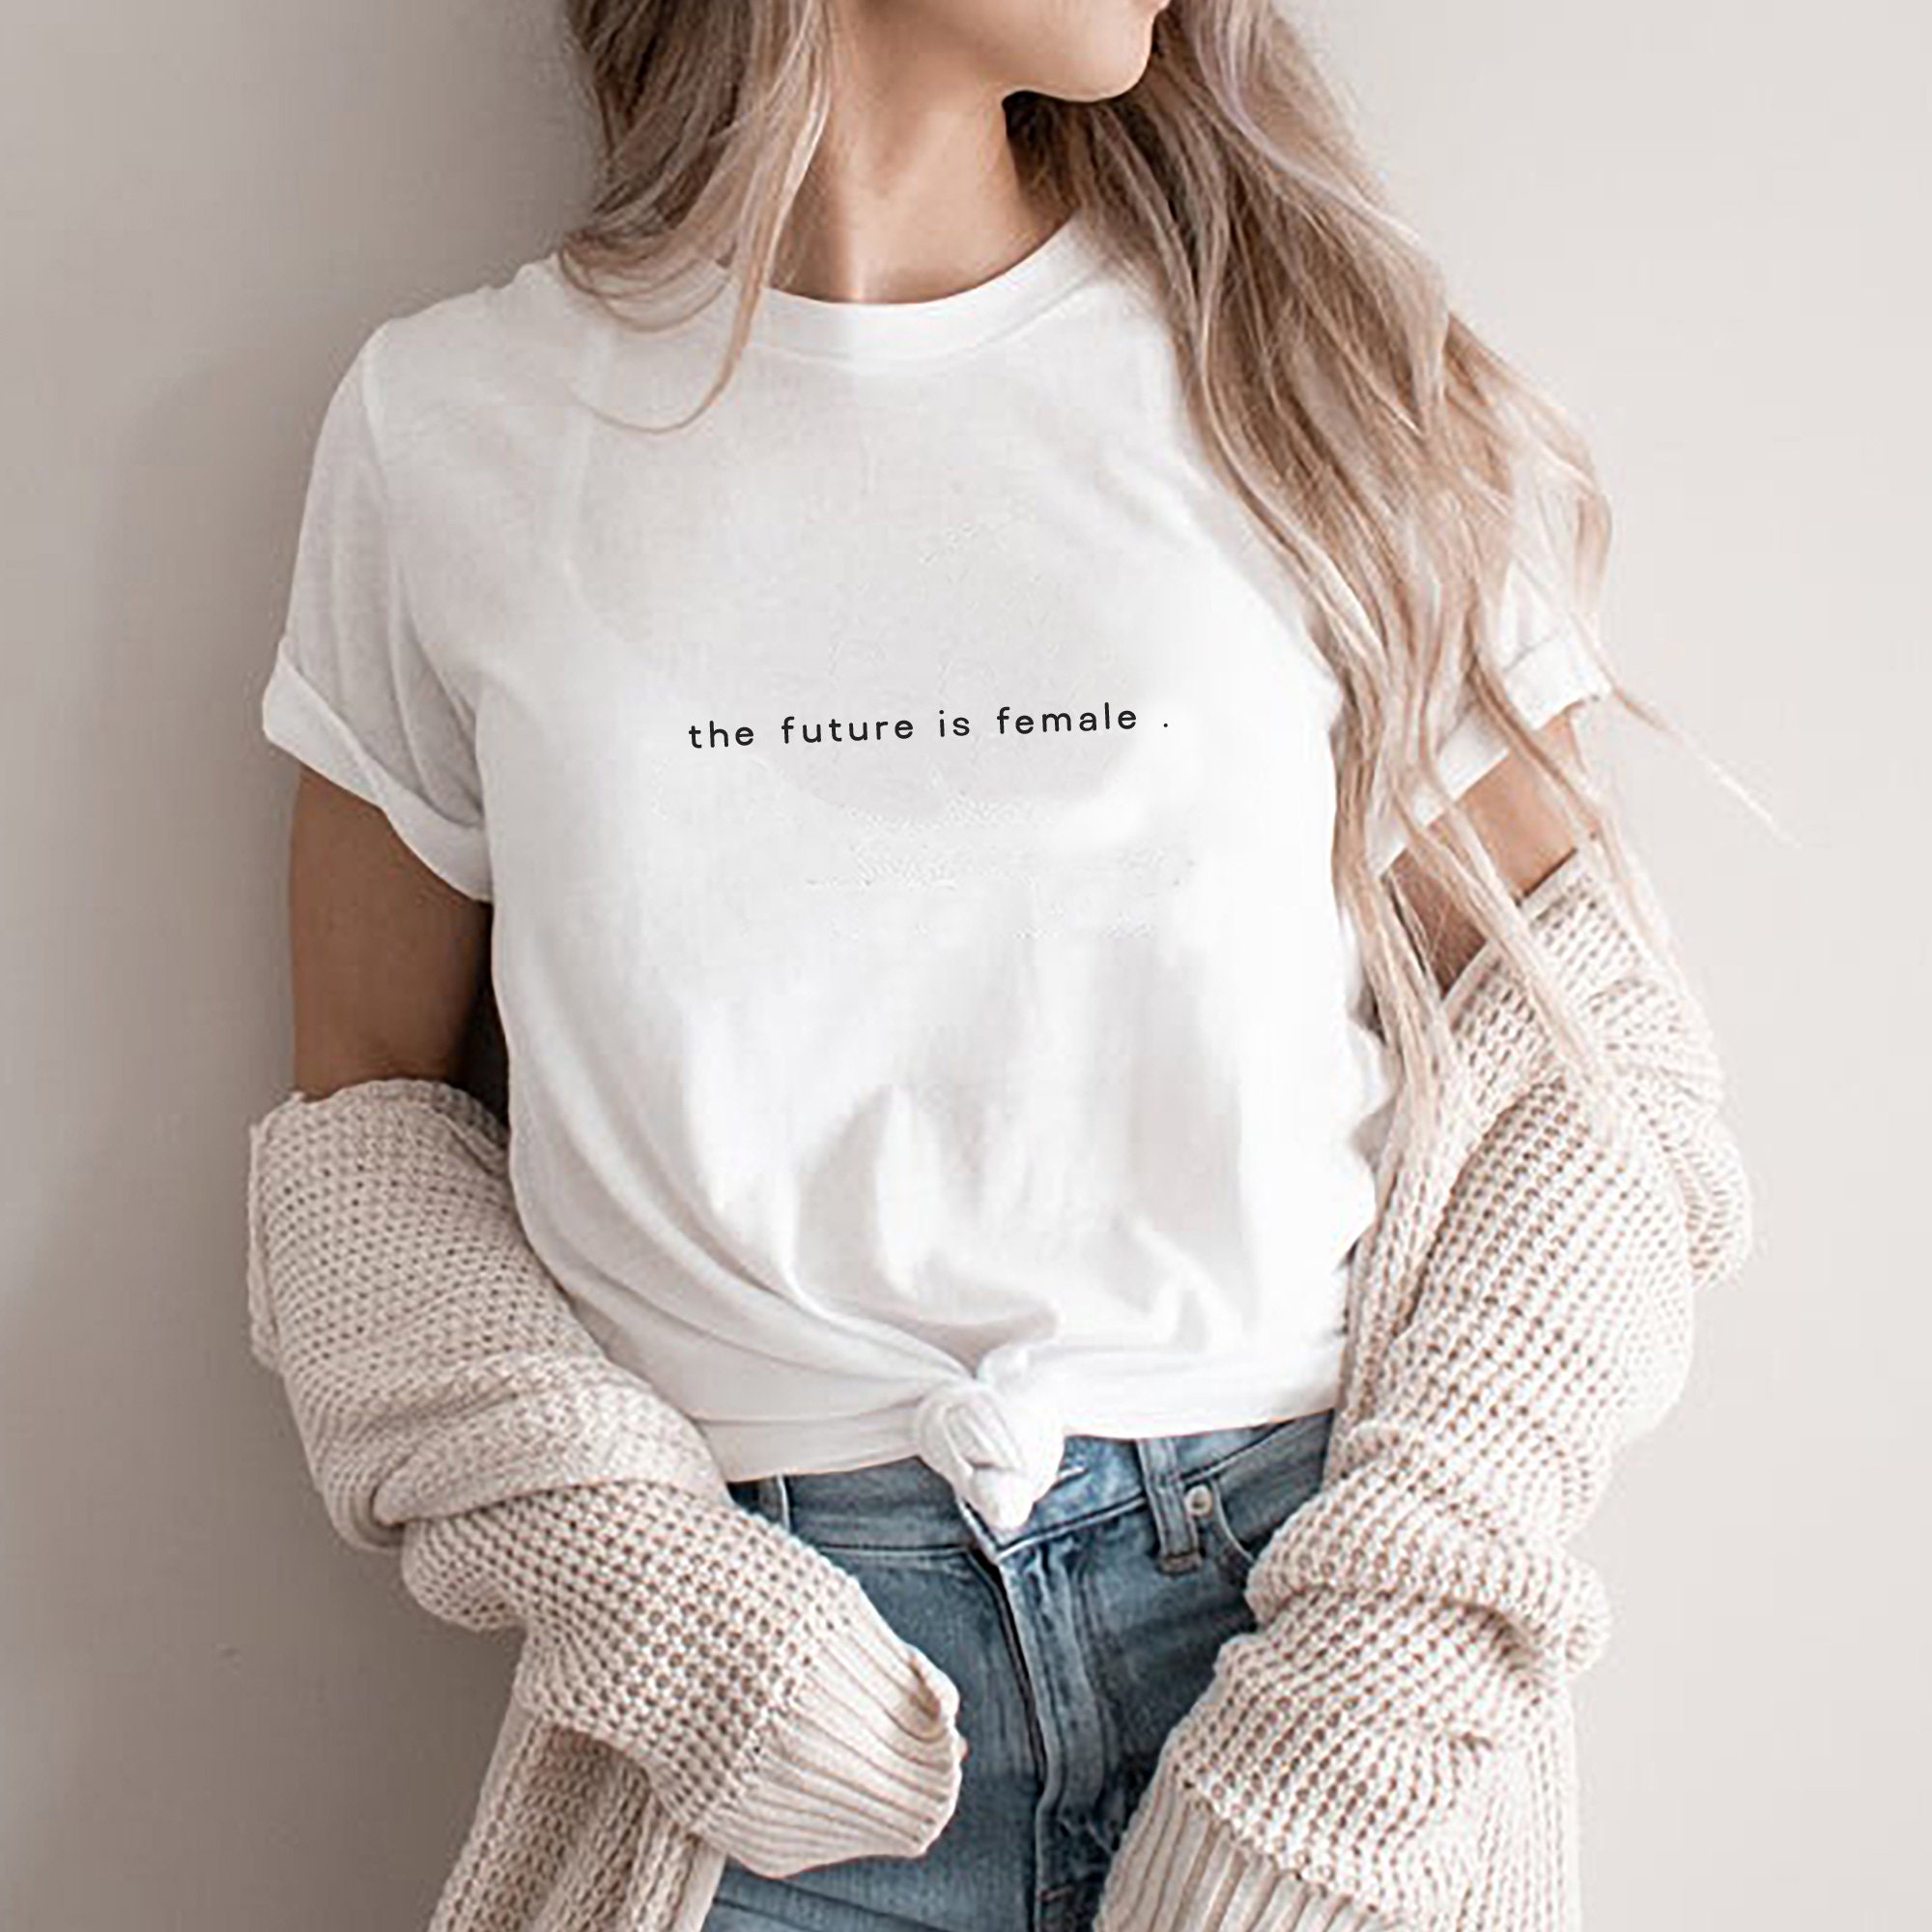 The future is female T-shirt feminist shirt womens or unisex | Etsy